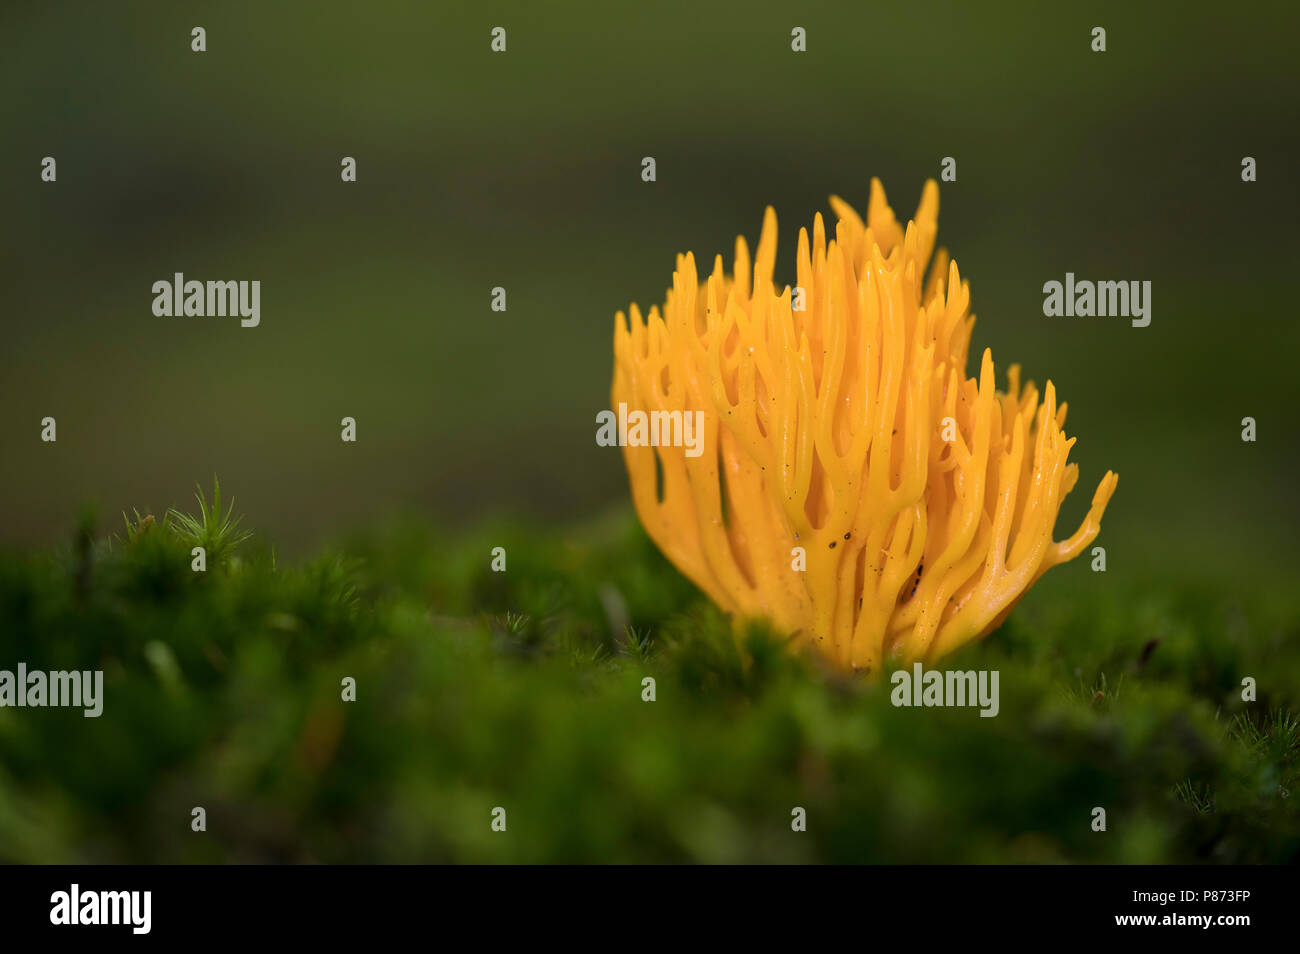 Kleverig koraalzwammetje; Giallo staghorn fungo; Foto Stock